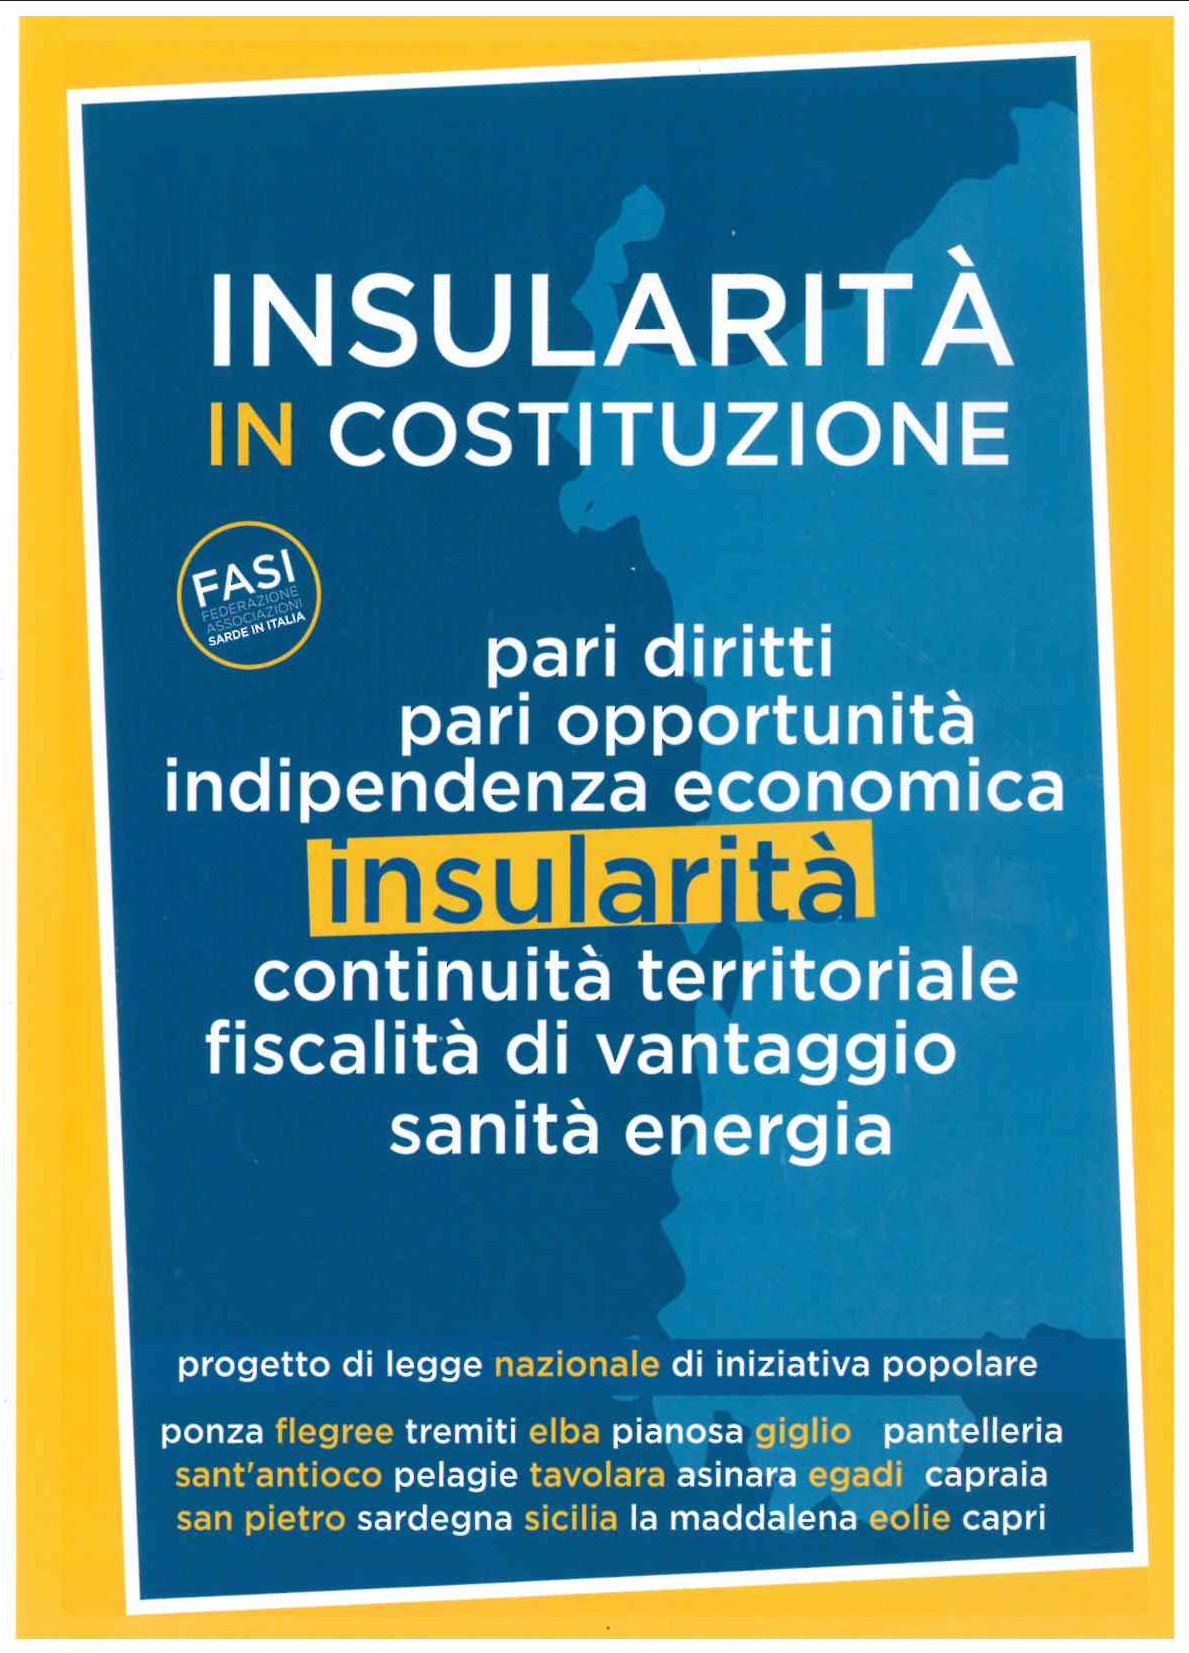 Da Gattinara la raccolta firma per "Insularità in Costituzione"